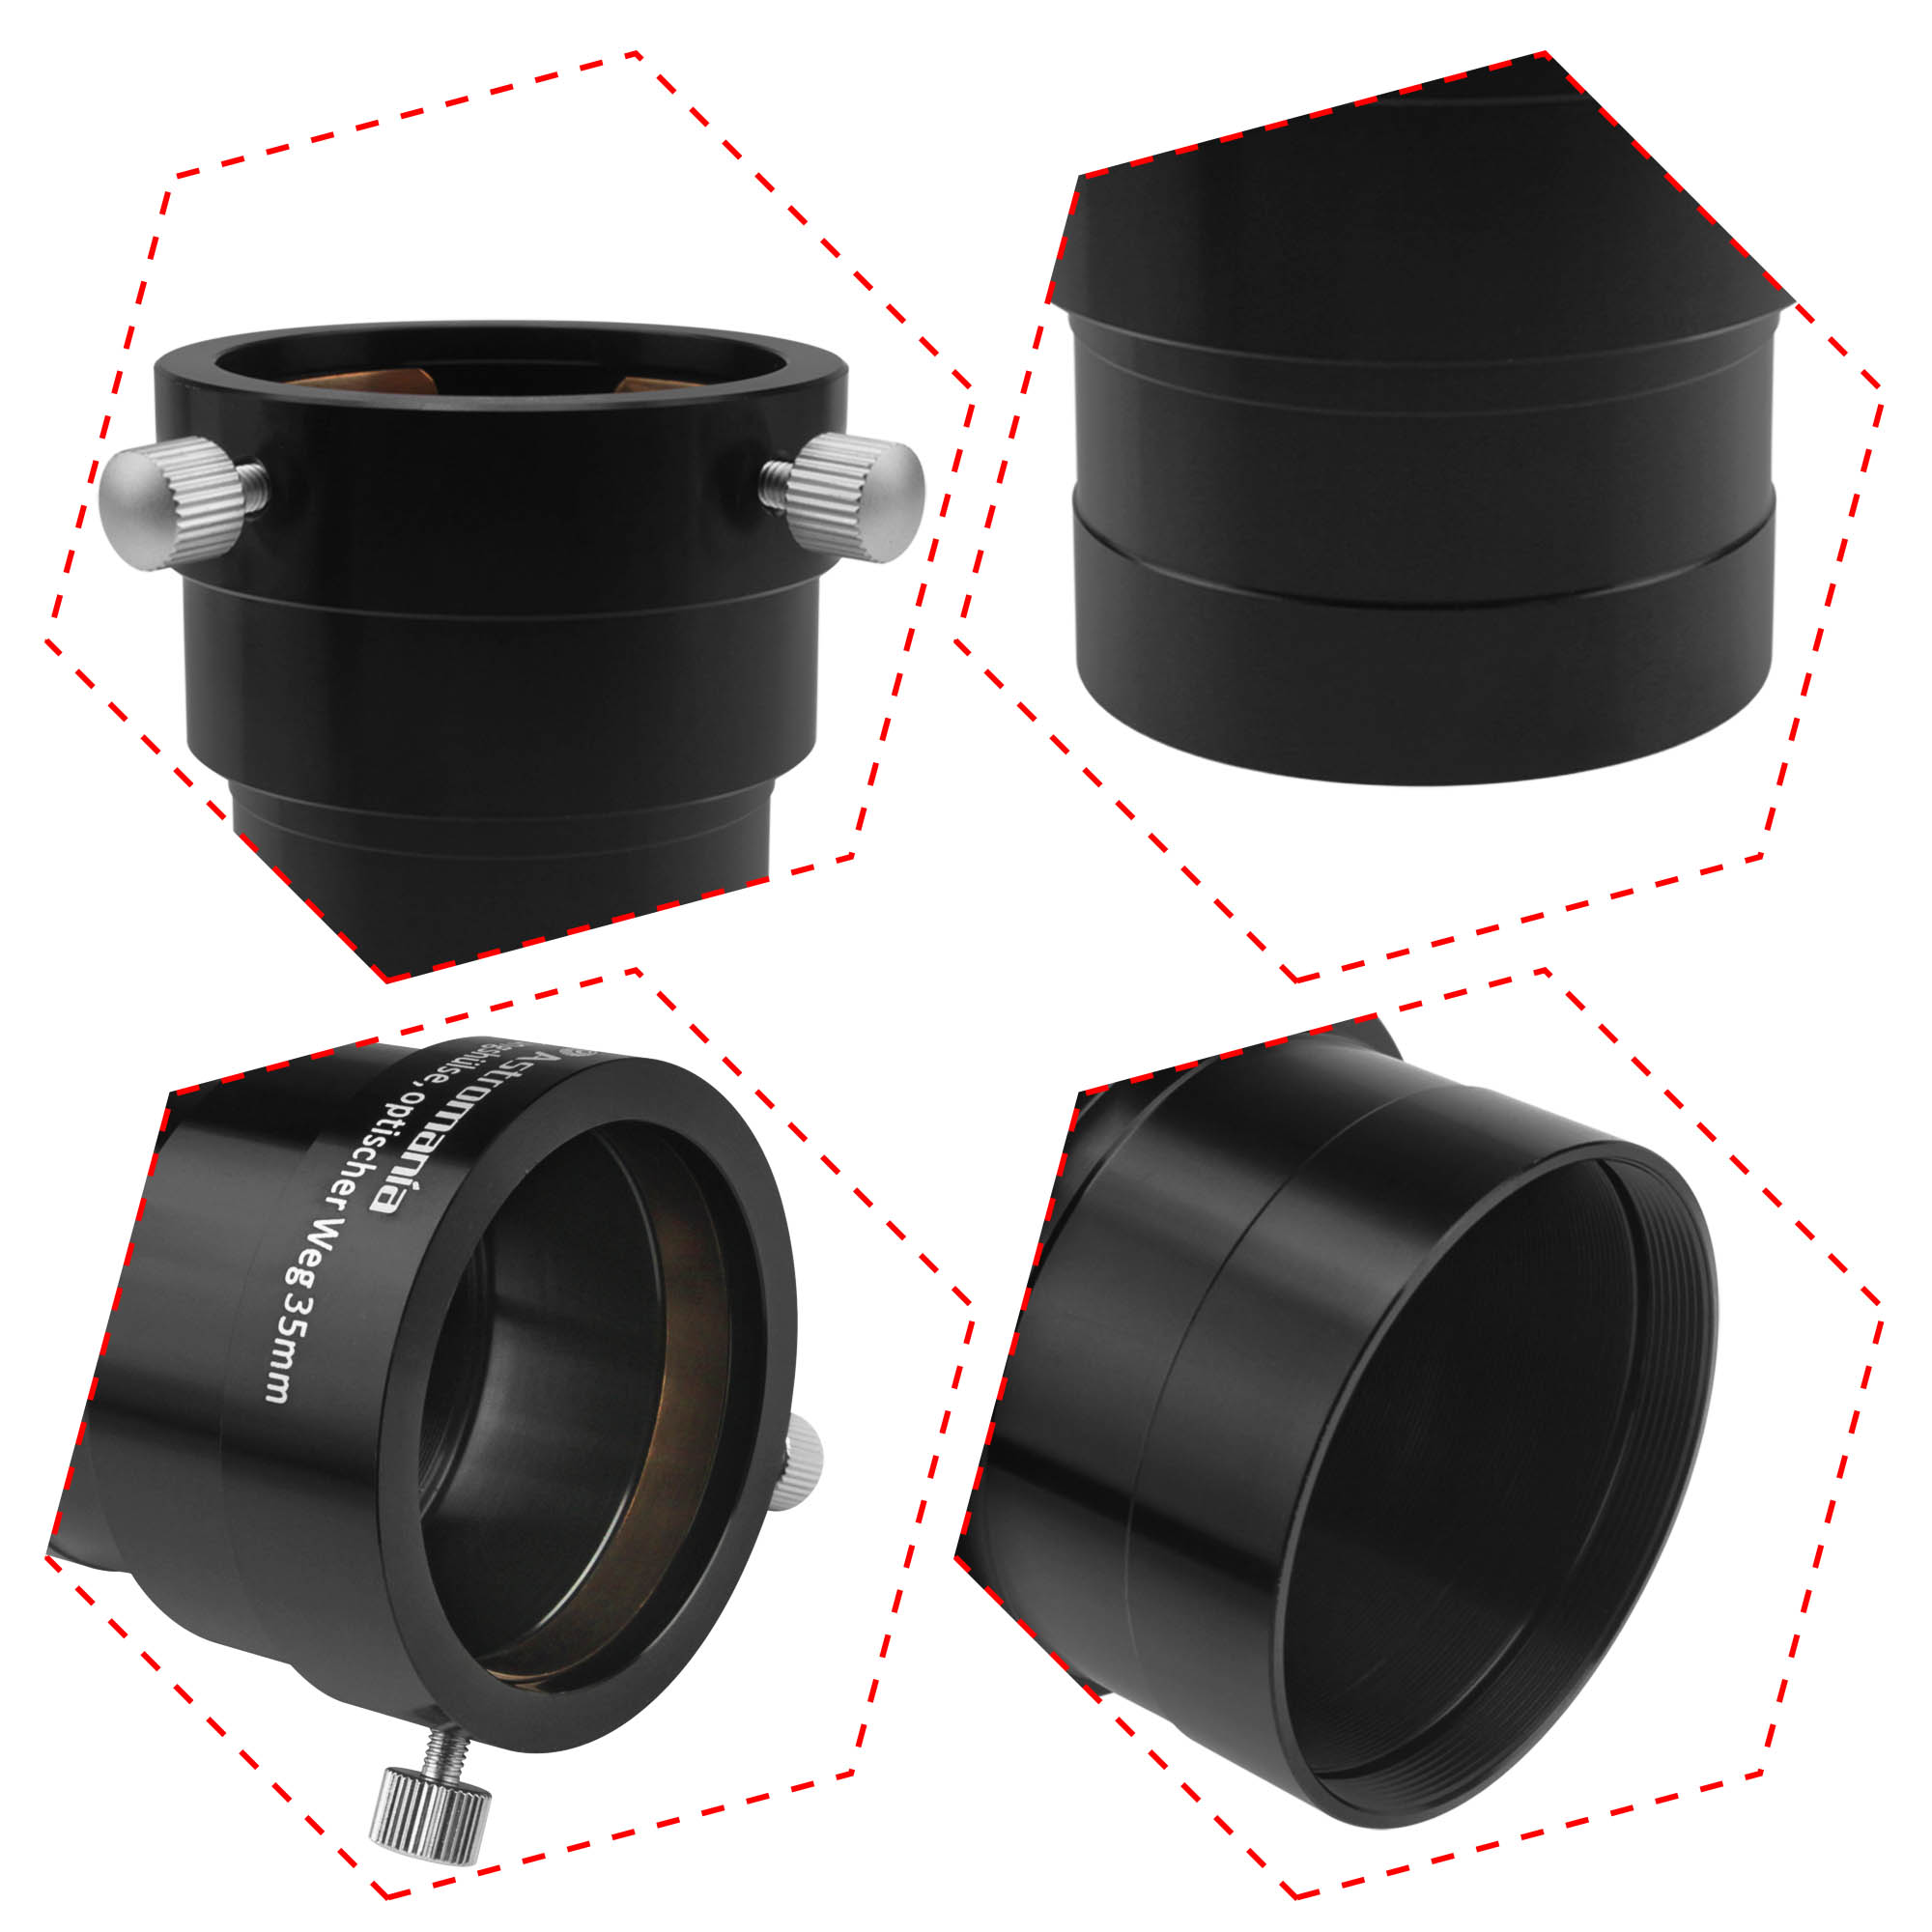 Astromania 2-Inch Telescope Eyepiece Extension Tube Adapter - Optical Telescope Back-focus Range Extension Tube